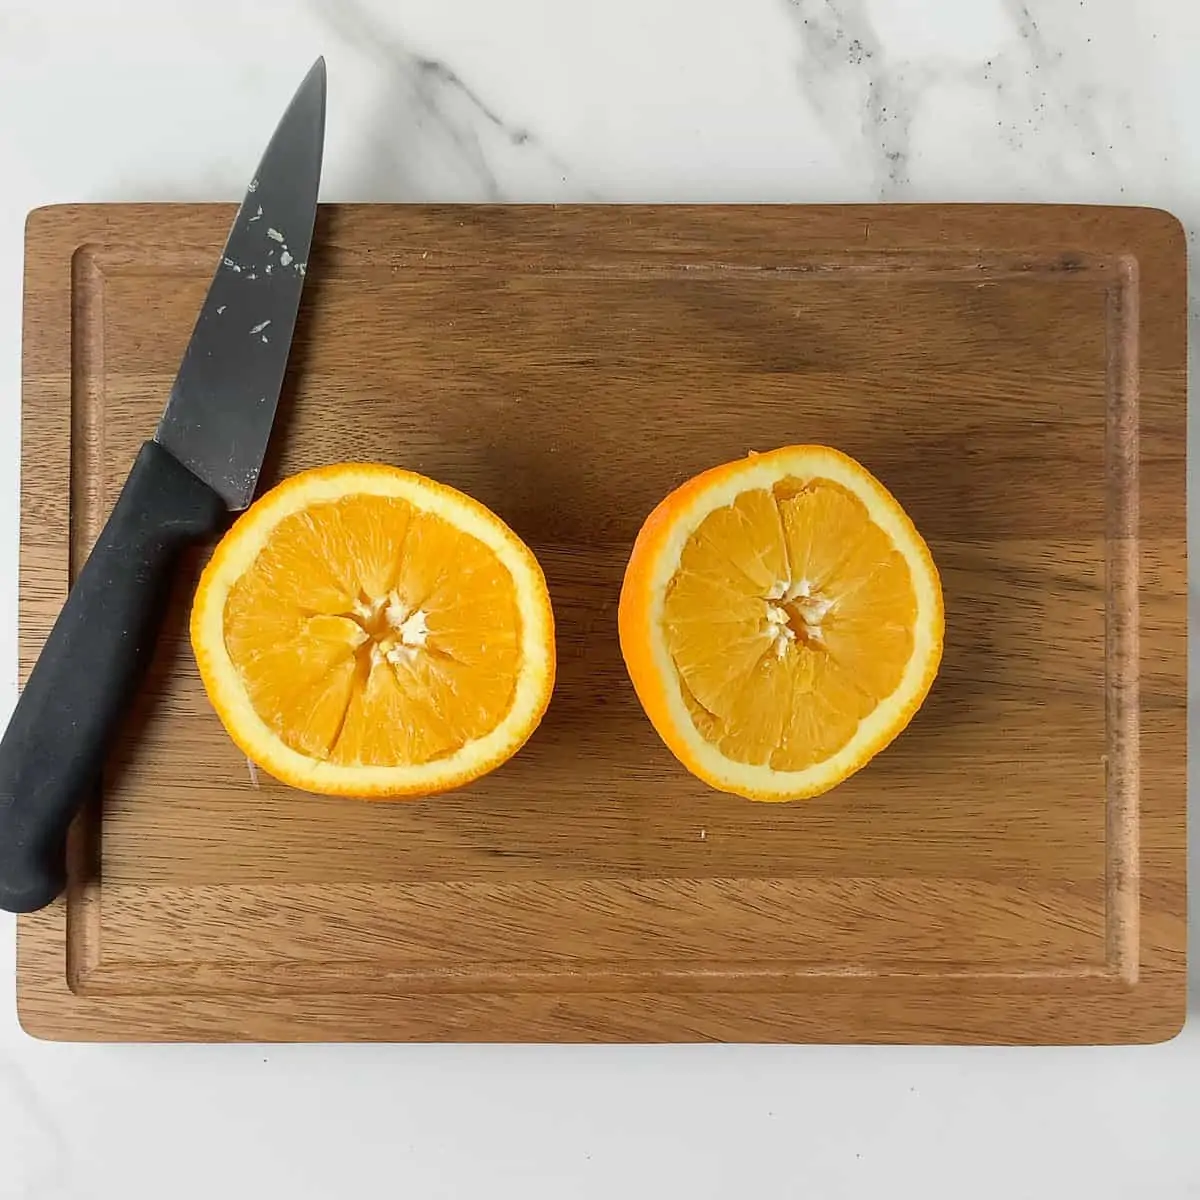 navel orange halves sliced into wedges on cutting board